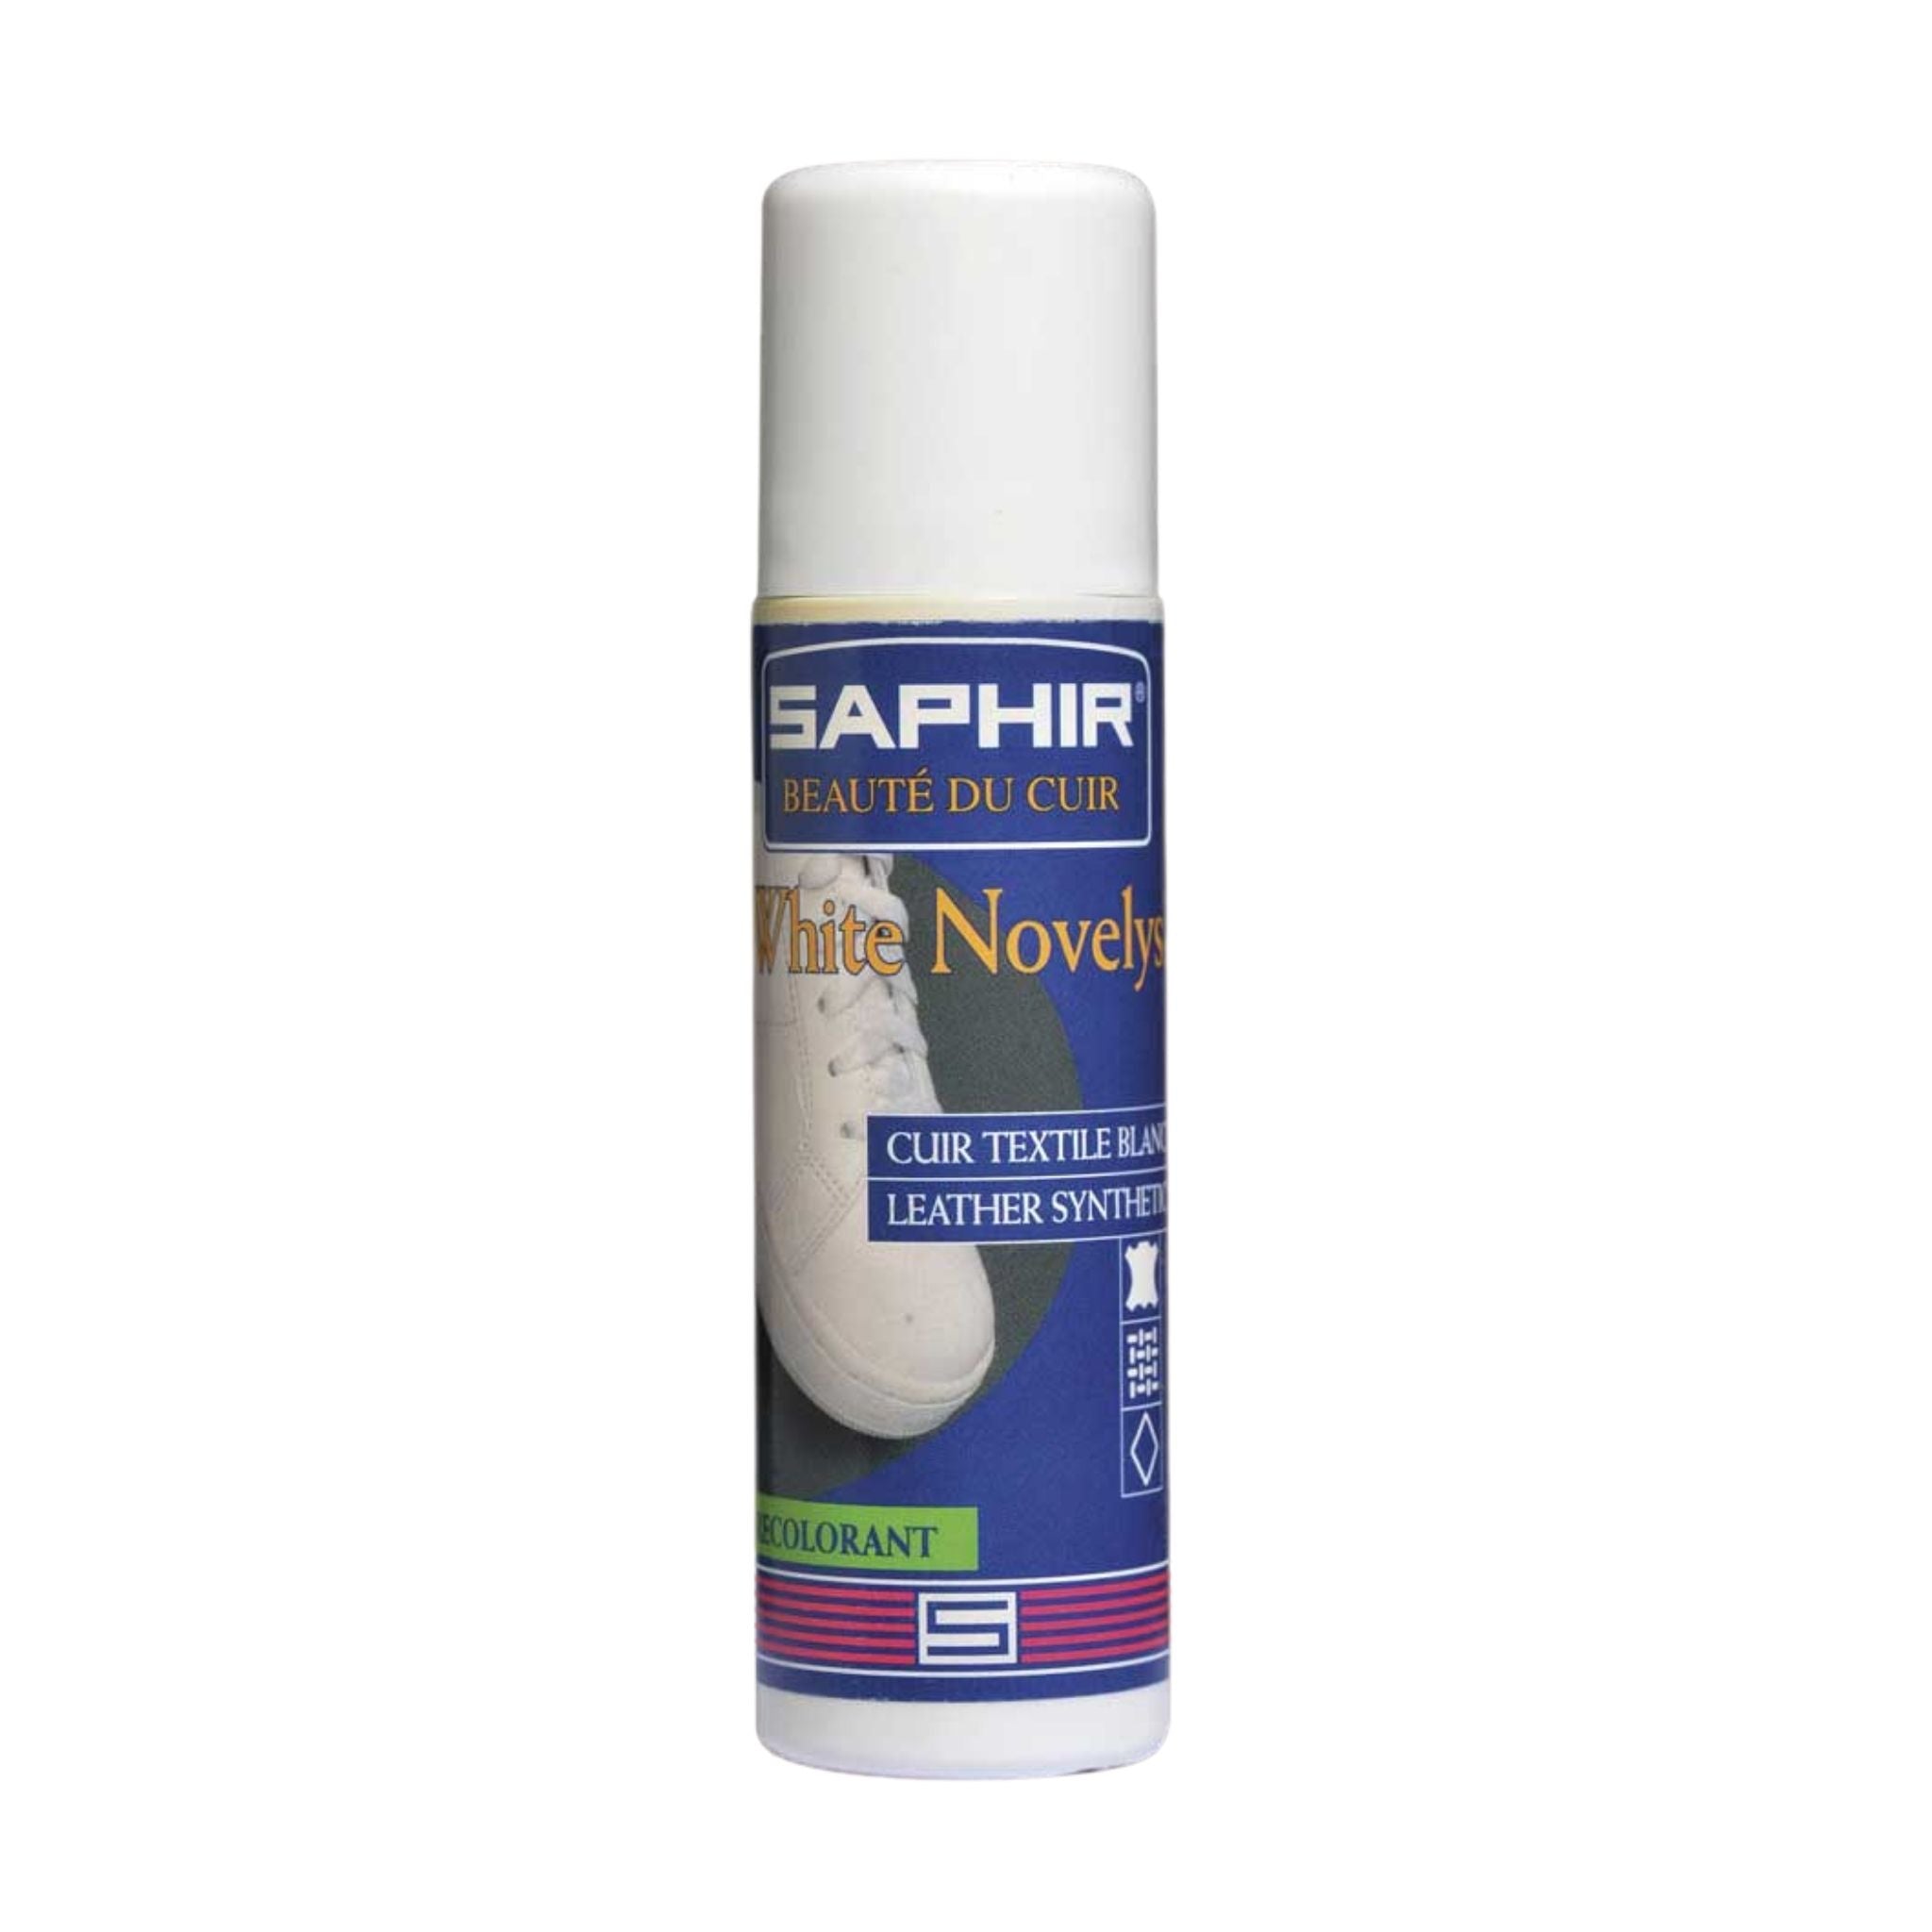 Saphir Novelys white leather cream